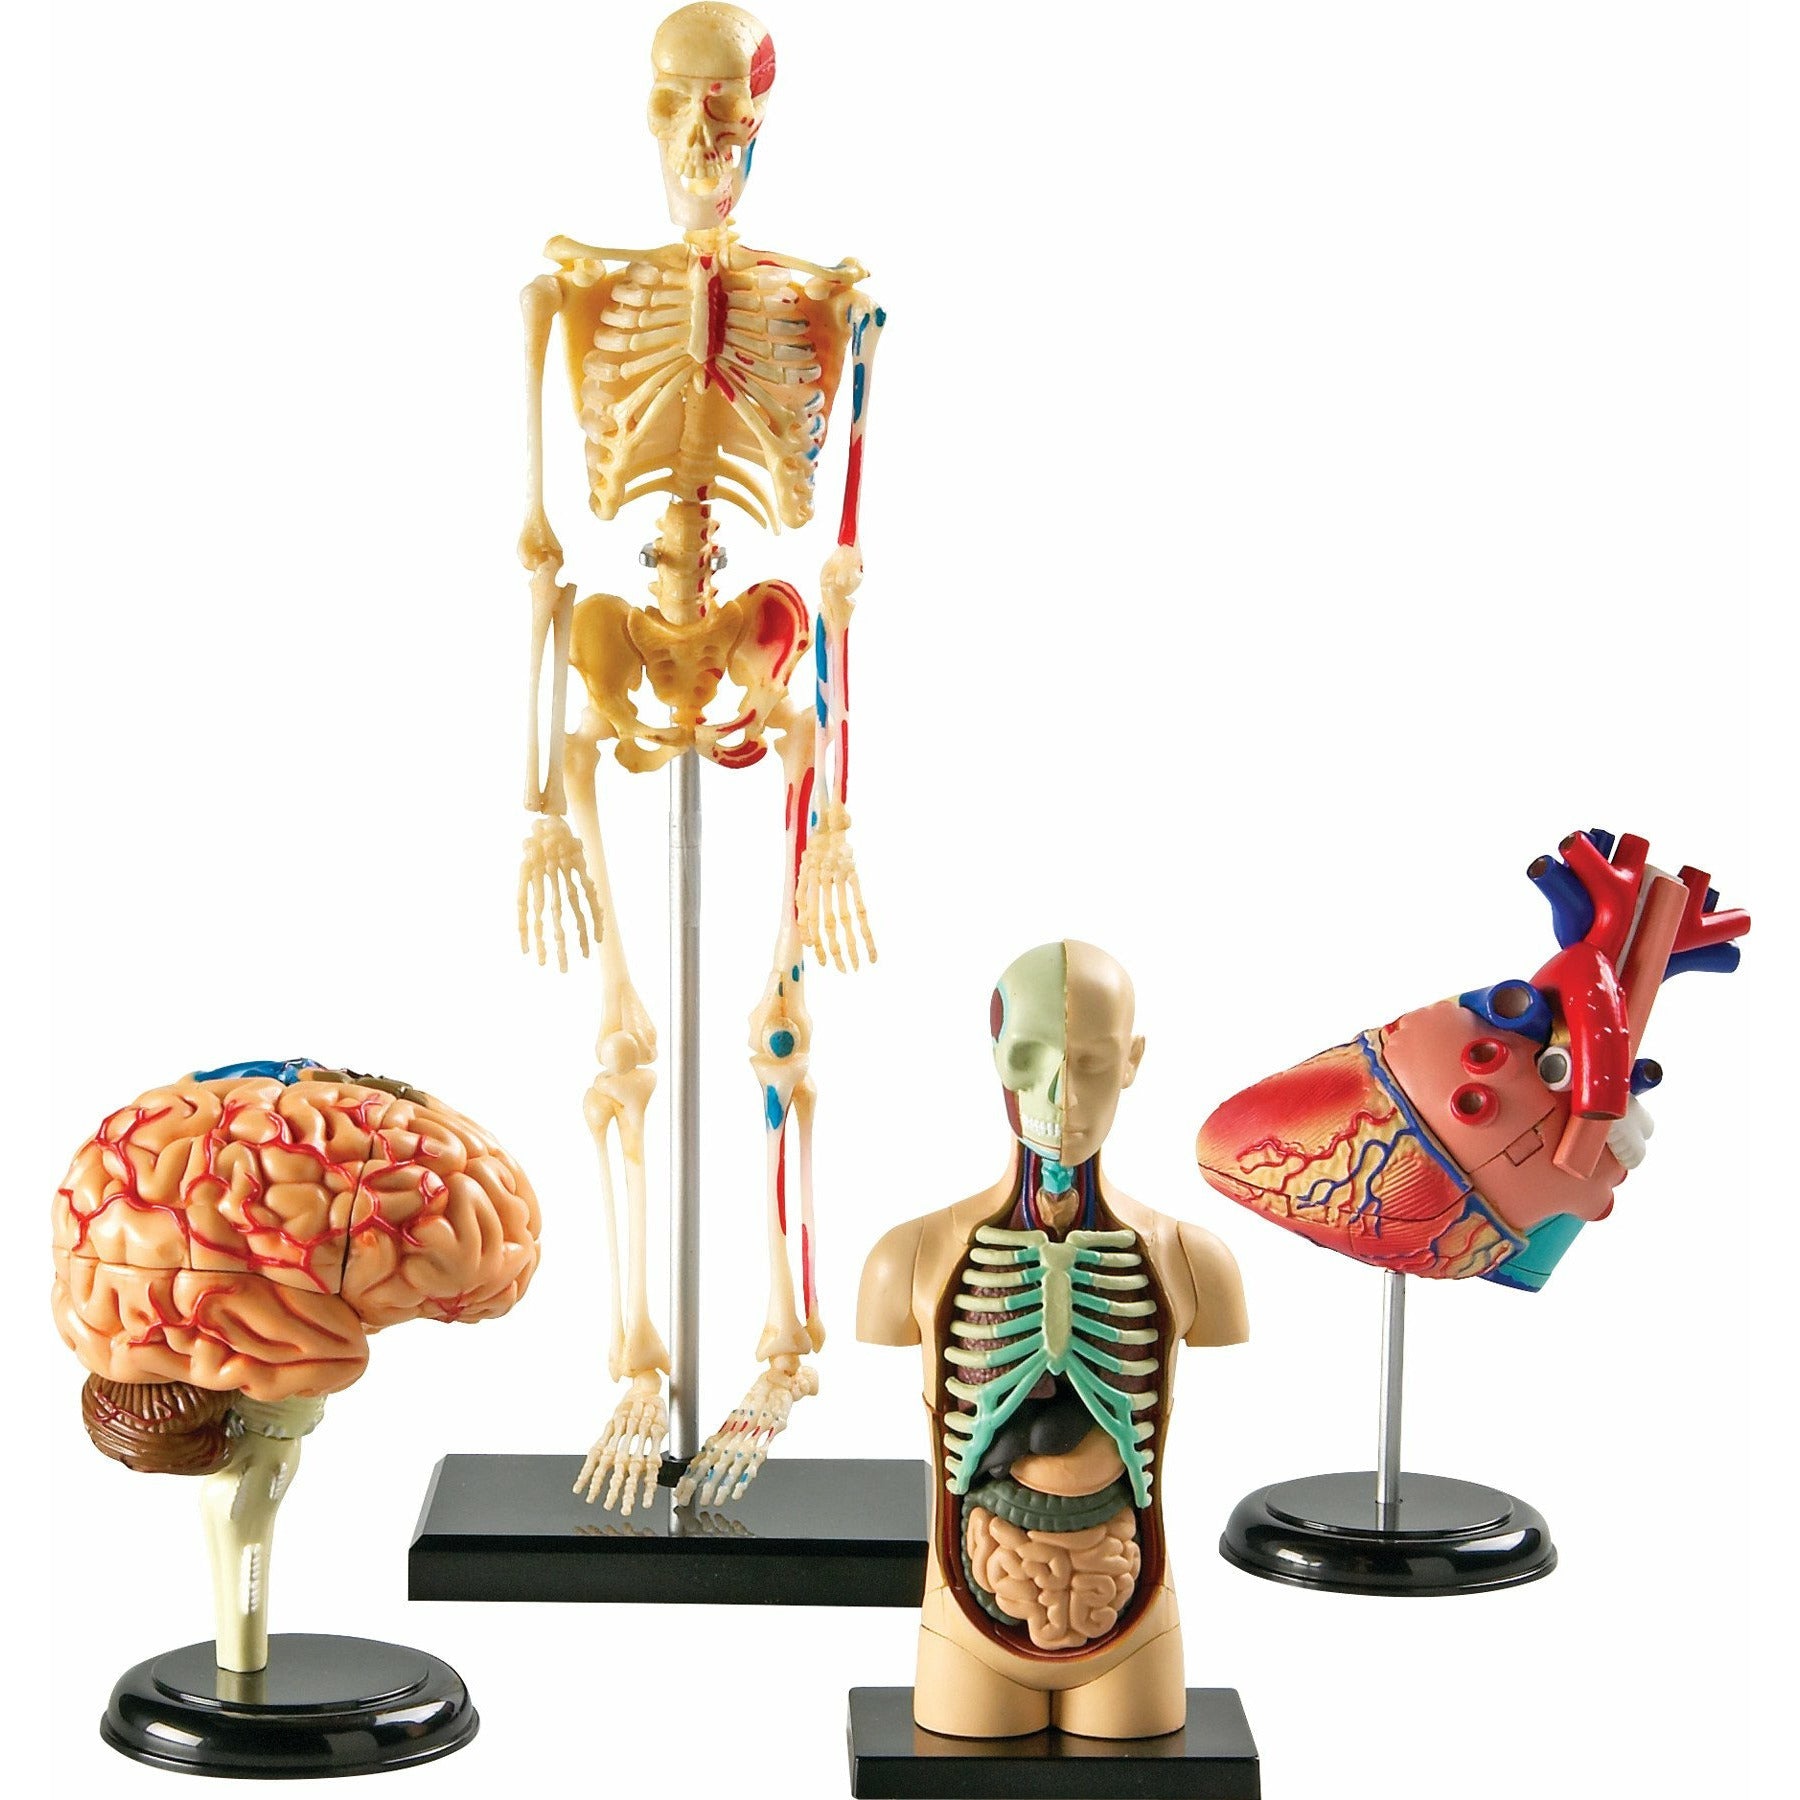 Anatomy Models, Set of all 4 models